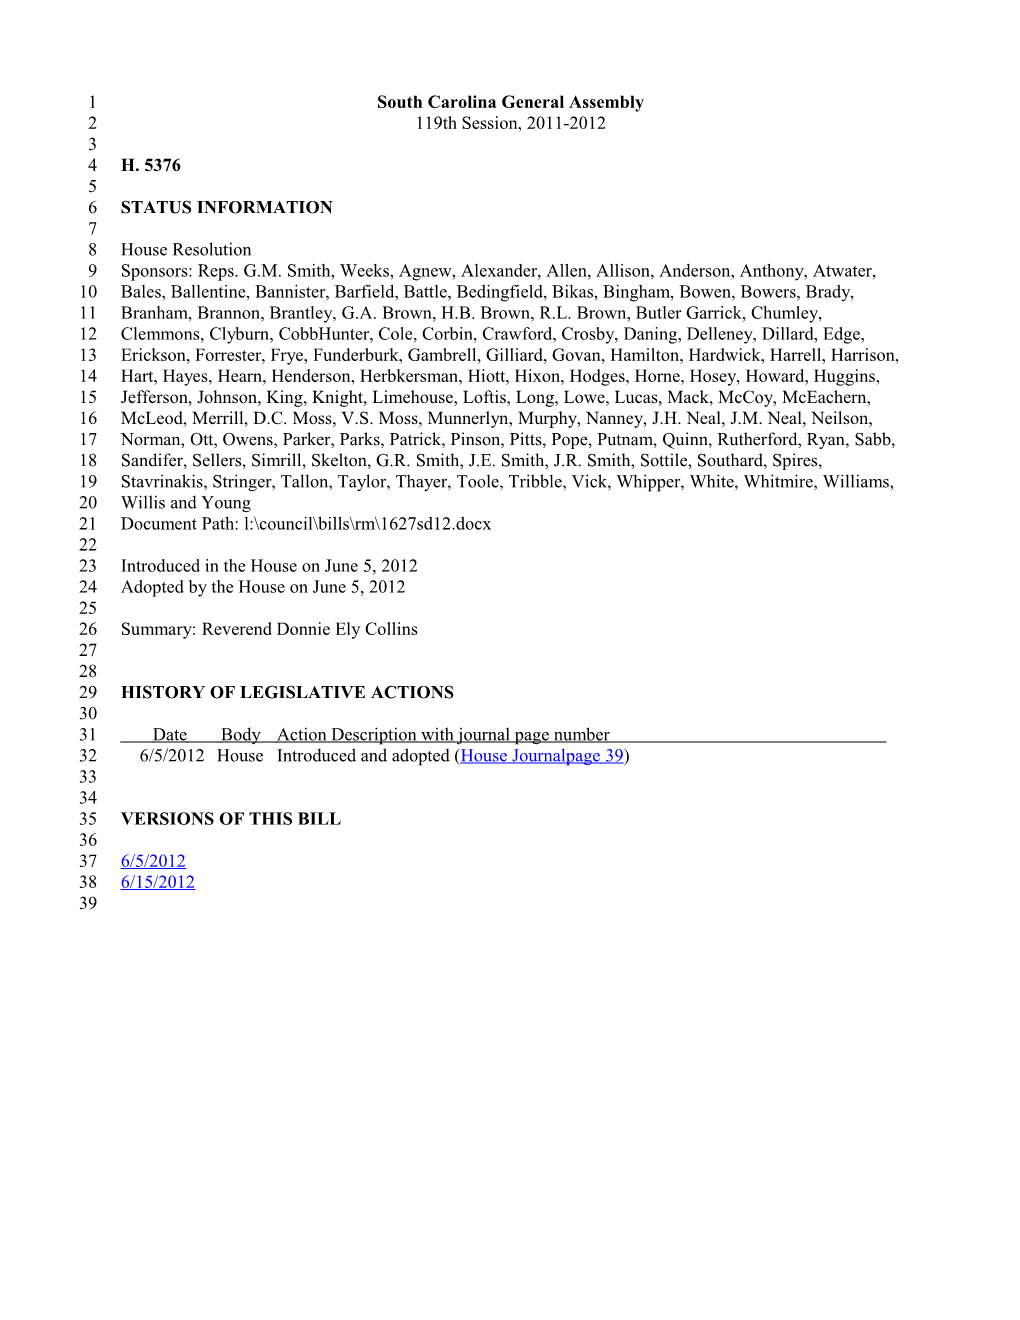 2011-2012 Bill 5376: Reverend Donnie Ely Collins - South Carolina Legislature Online